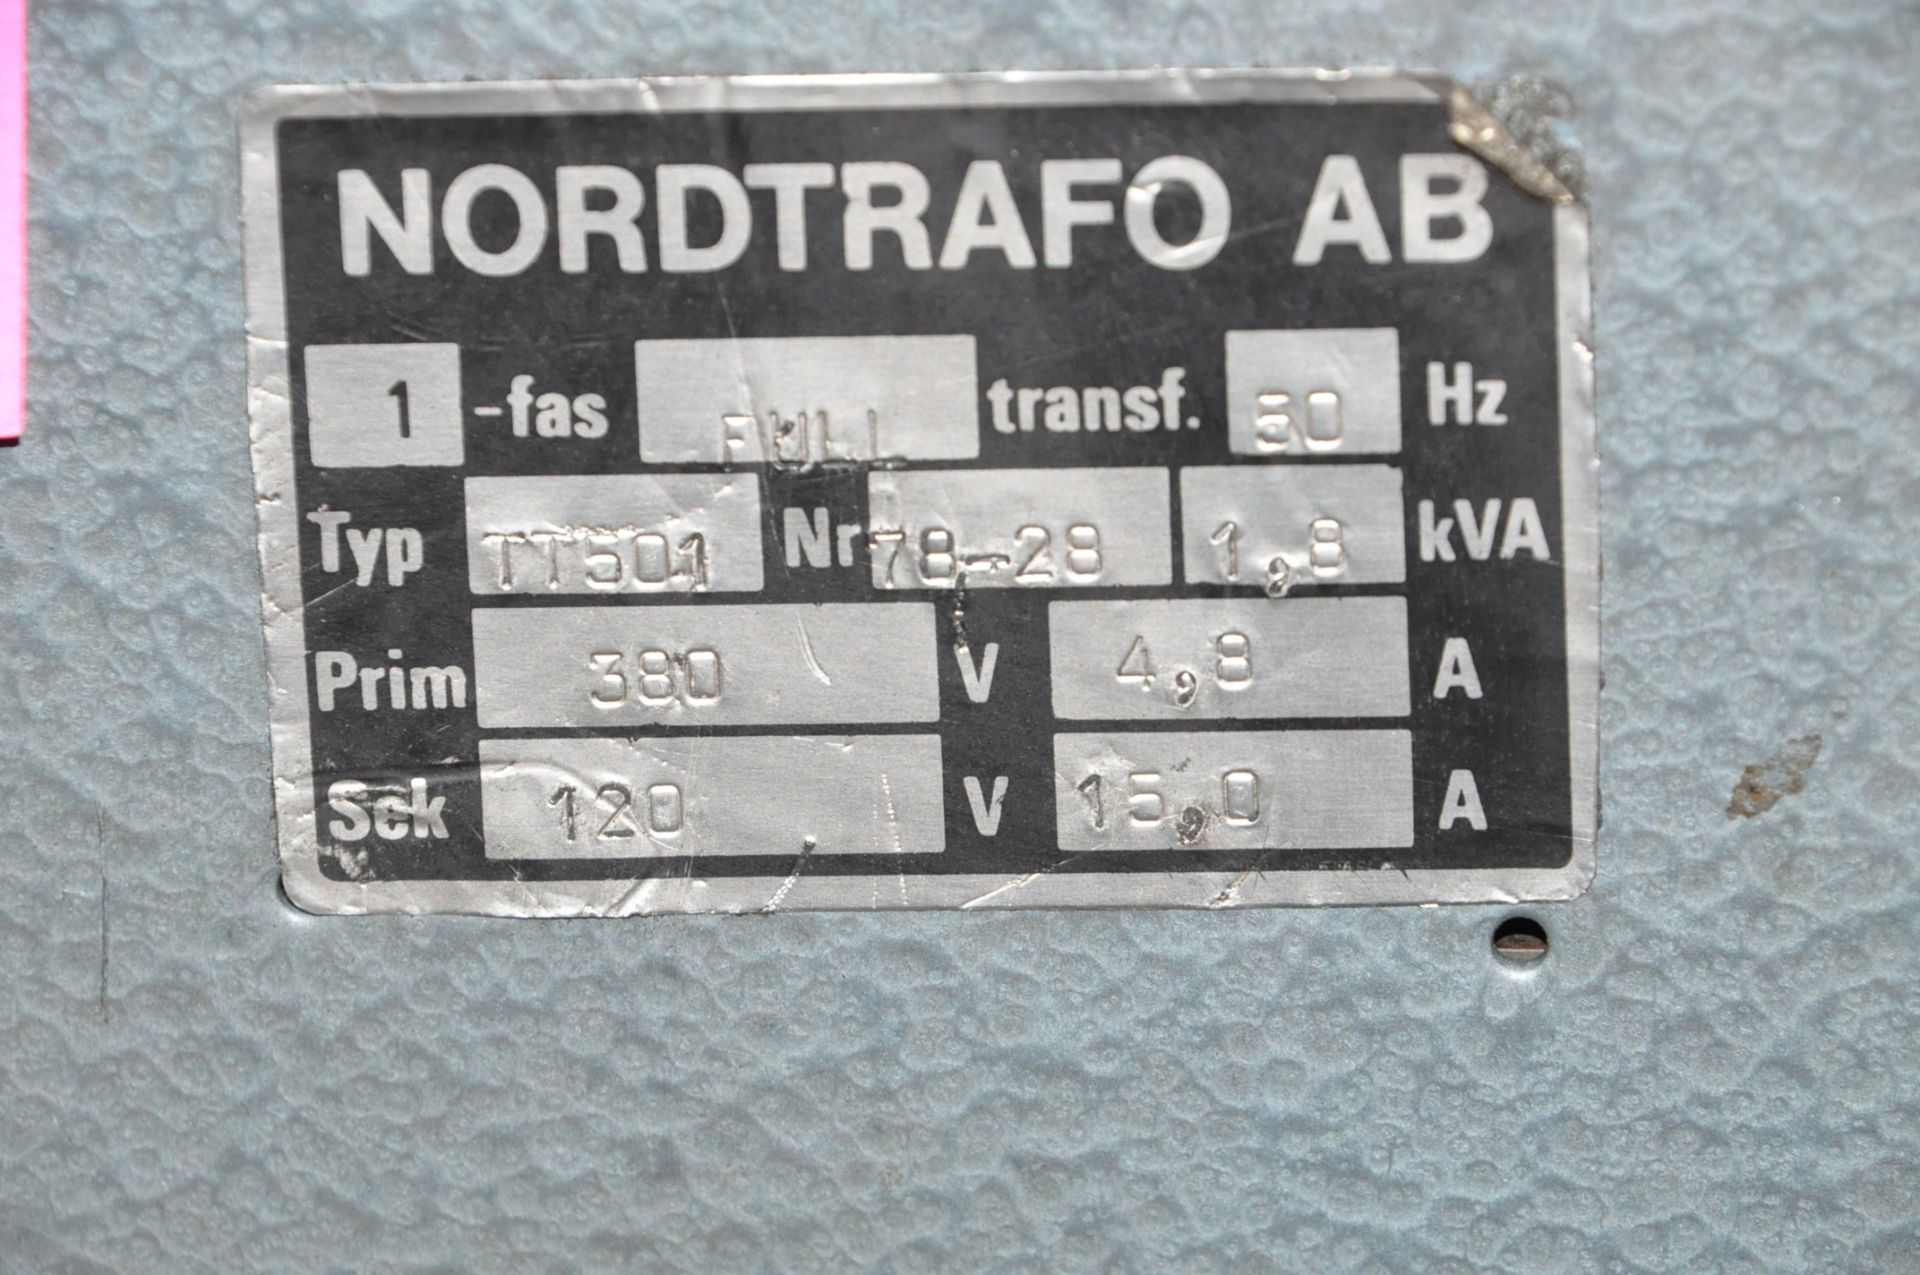 Nordtrafo AB 1.8-KVA Transformer, (Tool Room), (Pink Tag) - Image 2 of 2